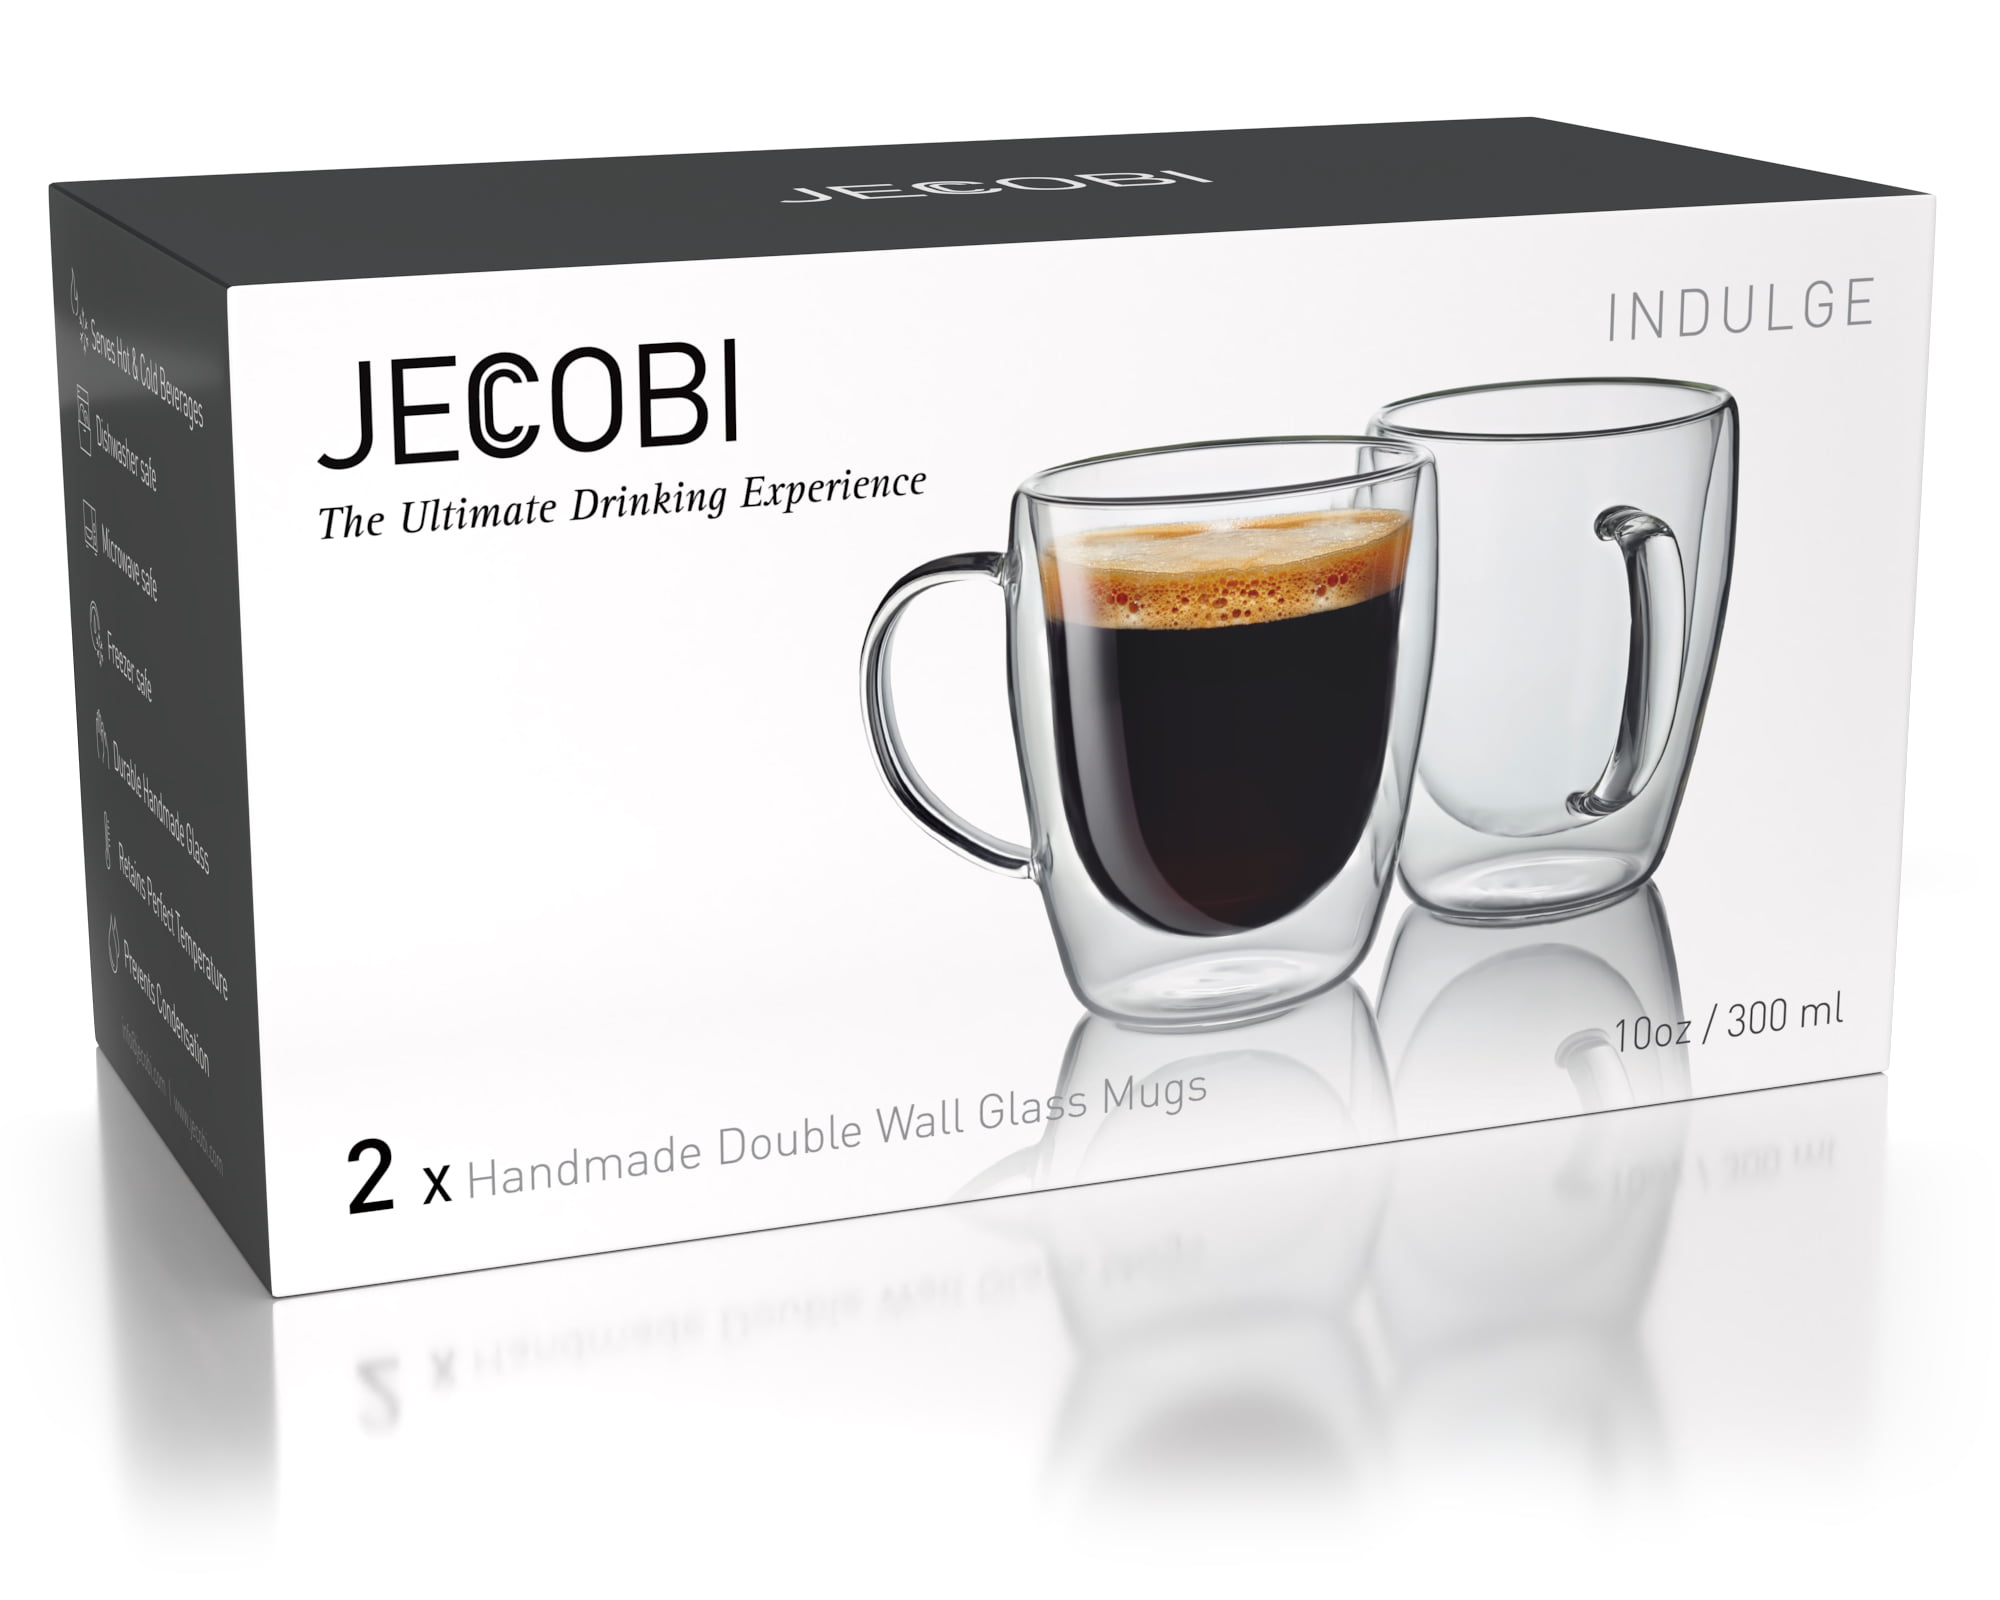 JoyJolt Star Wars TIE Fighter 10 oz. Clear Glass Double Wall Coffee Tea Mugs  (Set of 2) JSW10818 - The Home Depot